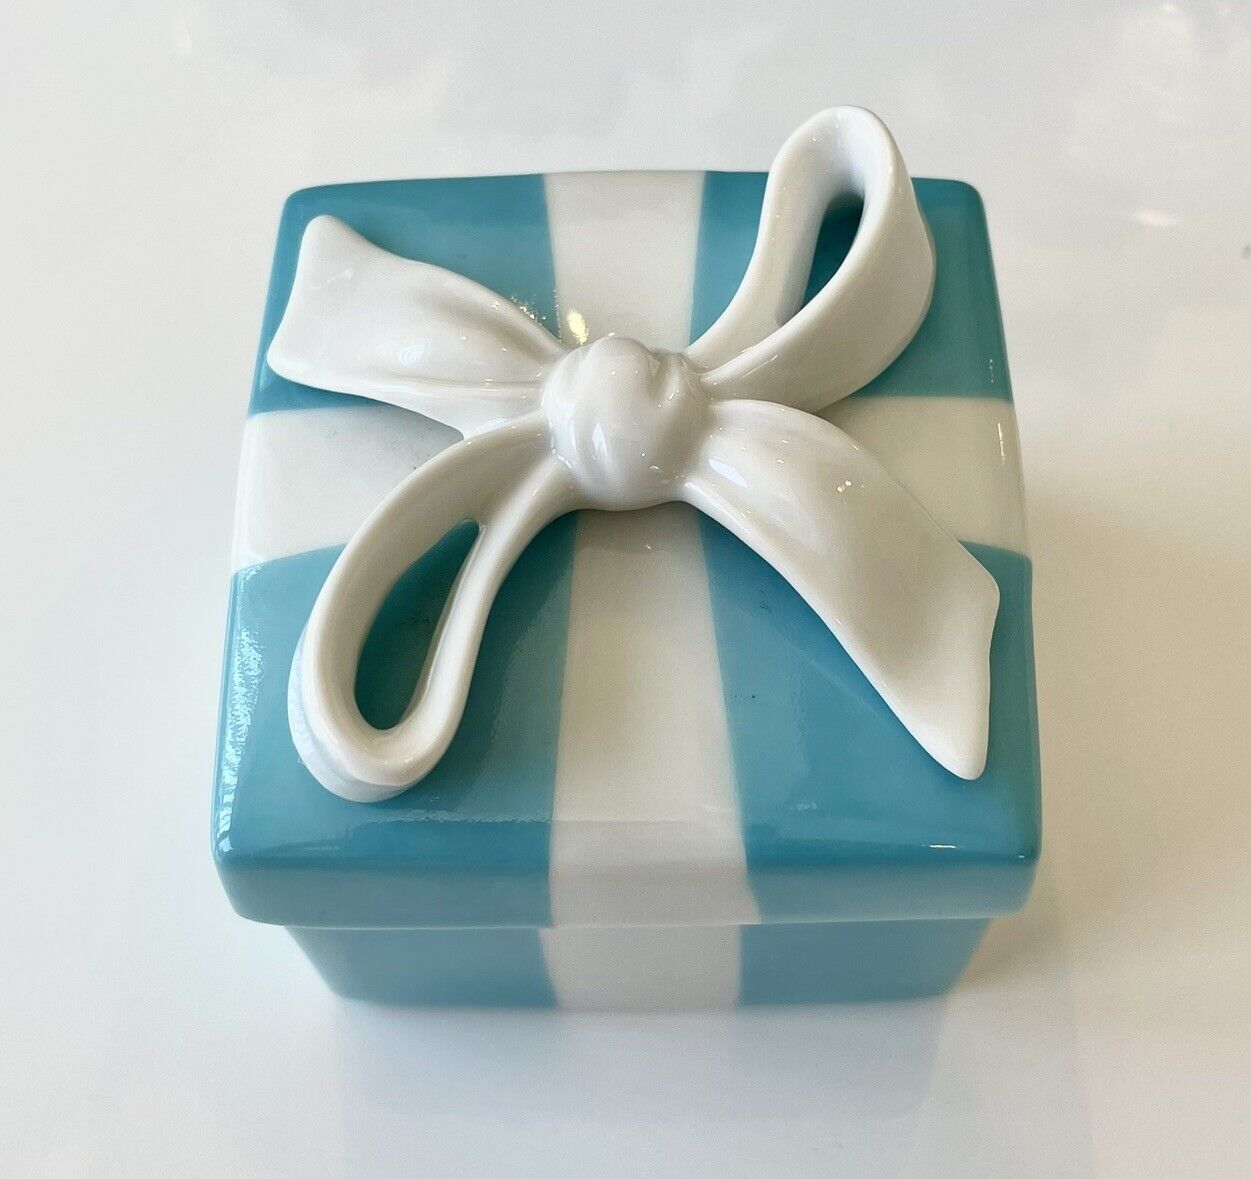 Tiffany & Co Blue & White Trinket Box - Vintage - 2” - Excellent Condition